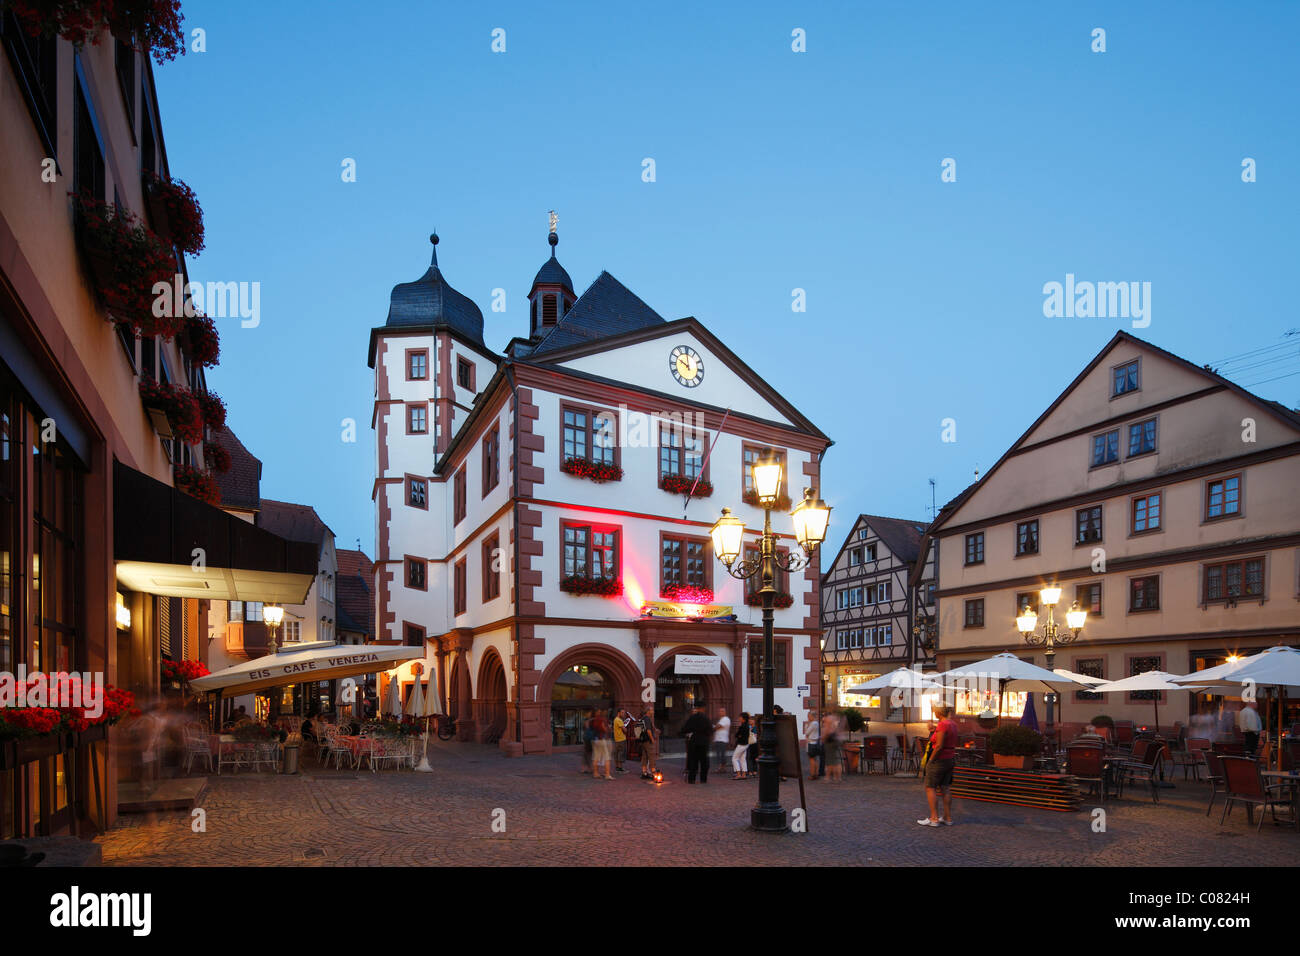 Town hall on market square, Lohr am Main, Mainfranken, Lower Franconia, Franconia, Bavaria, Germany, Europe Stock Photo